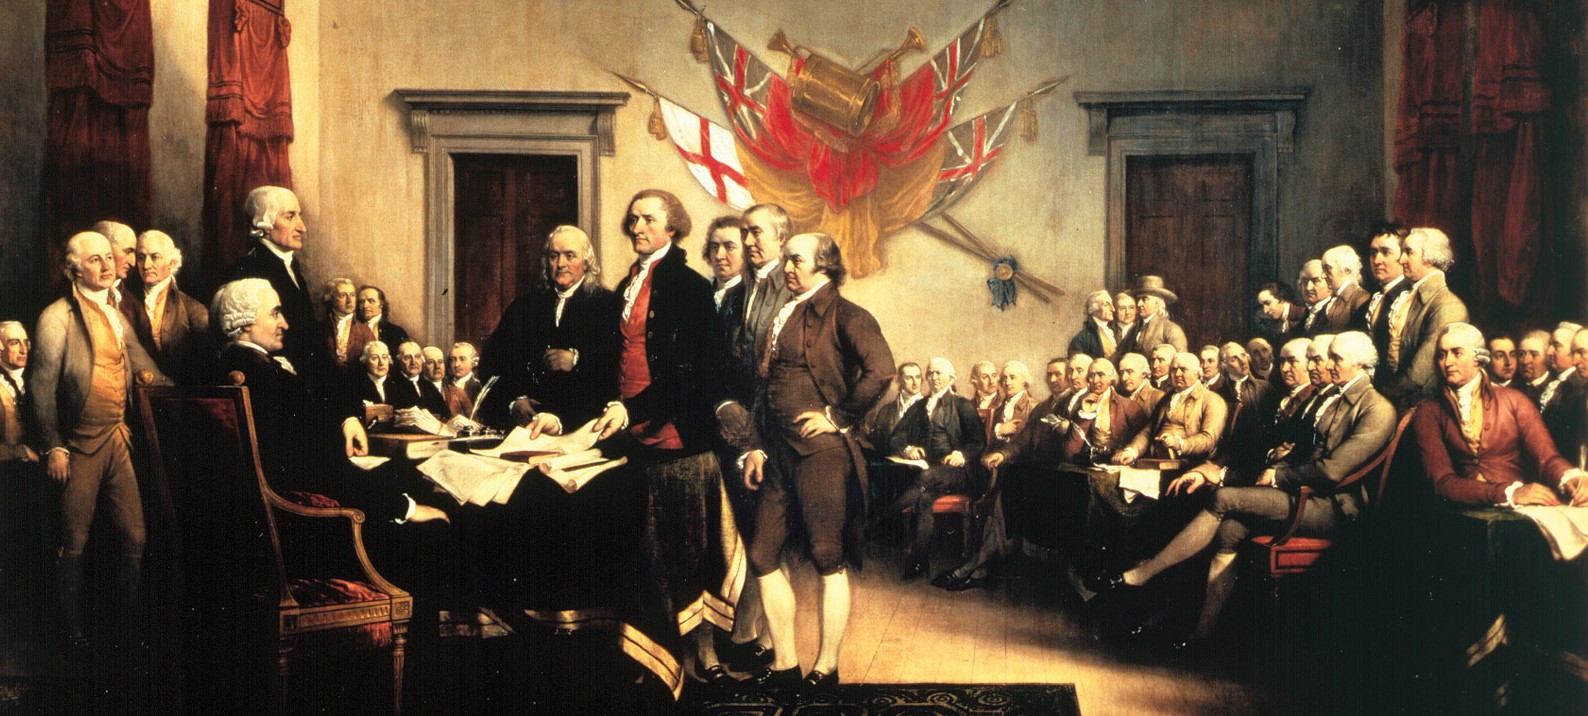 Declaration of Independance Vintage Image Pictures July 4, 1776